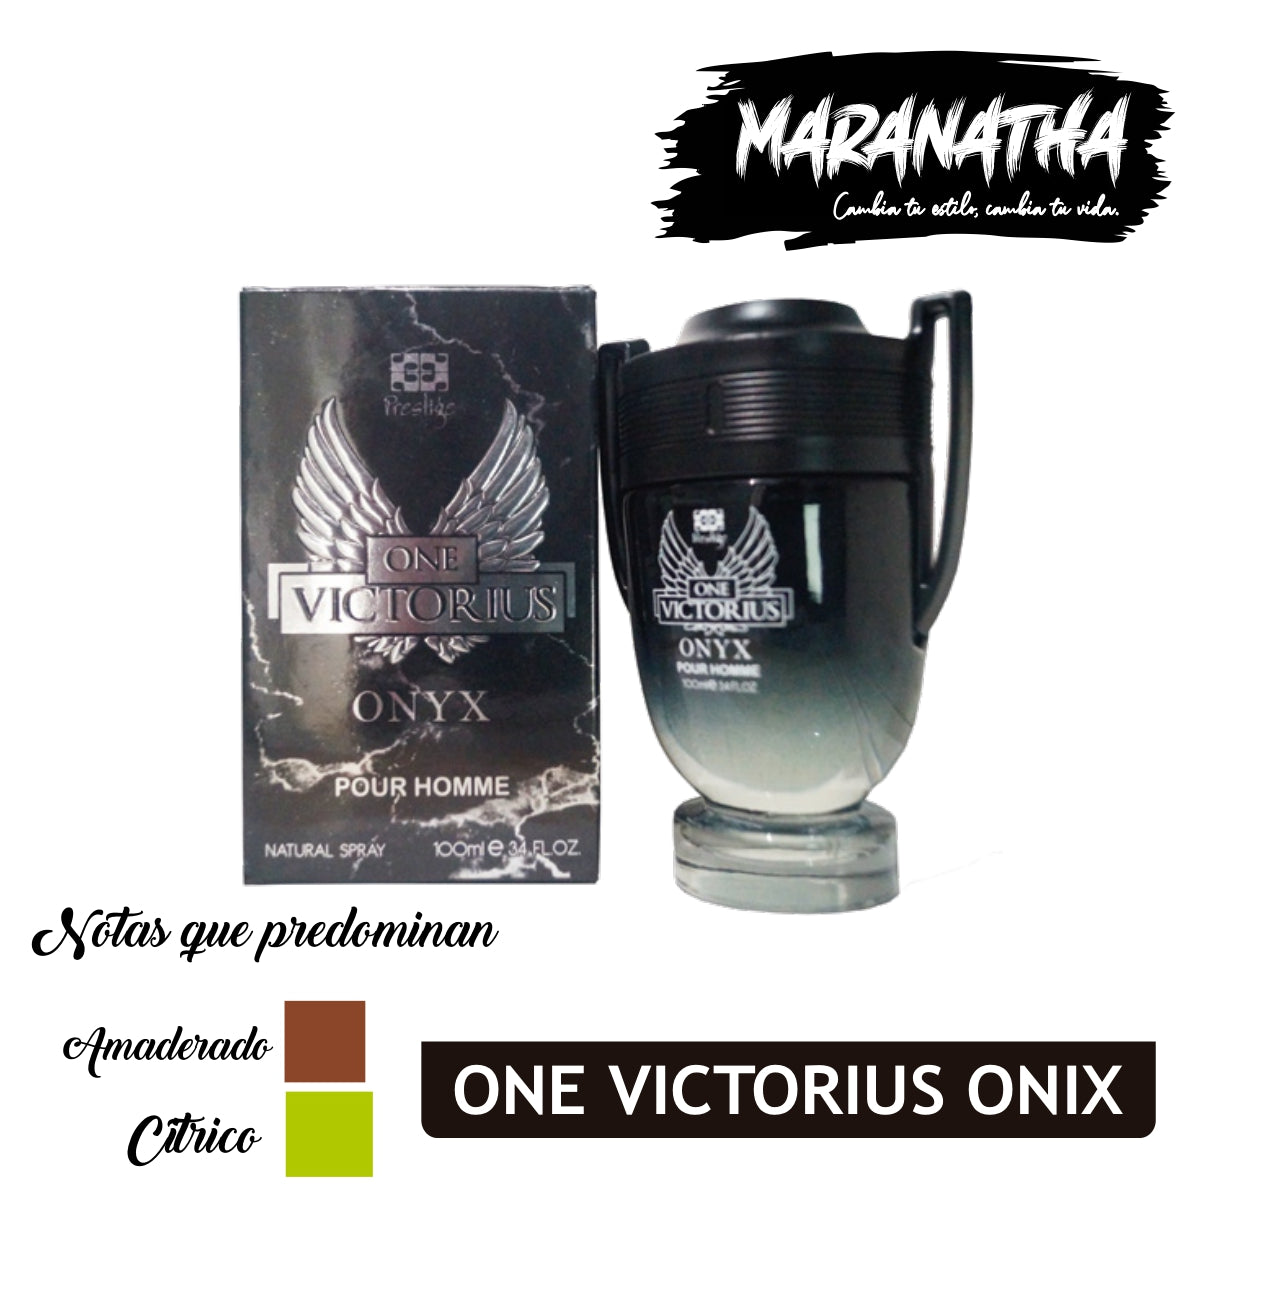 Perfume One victorius onix para hombre